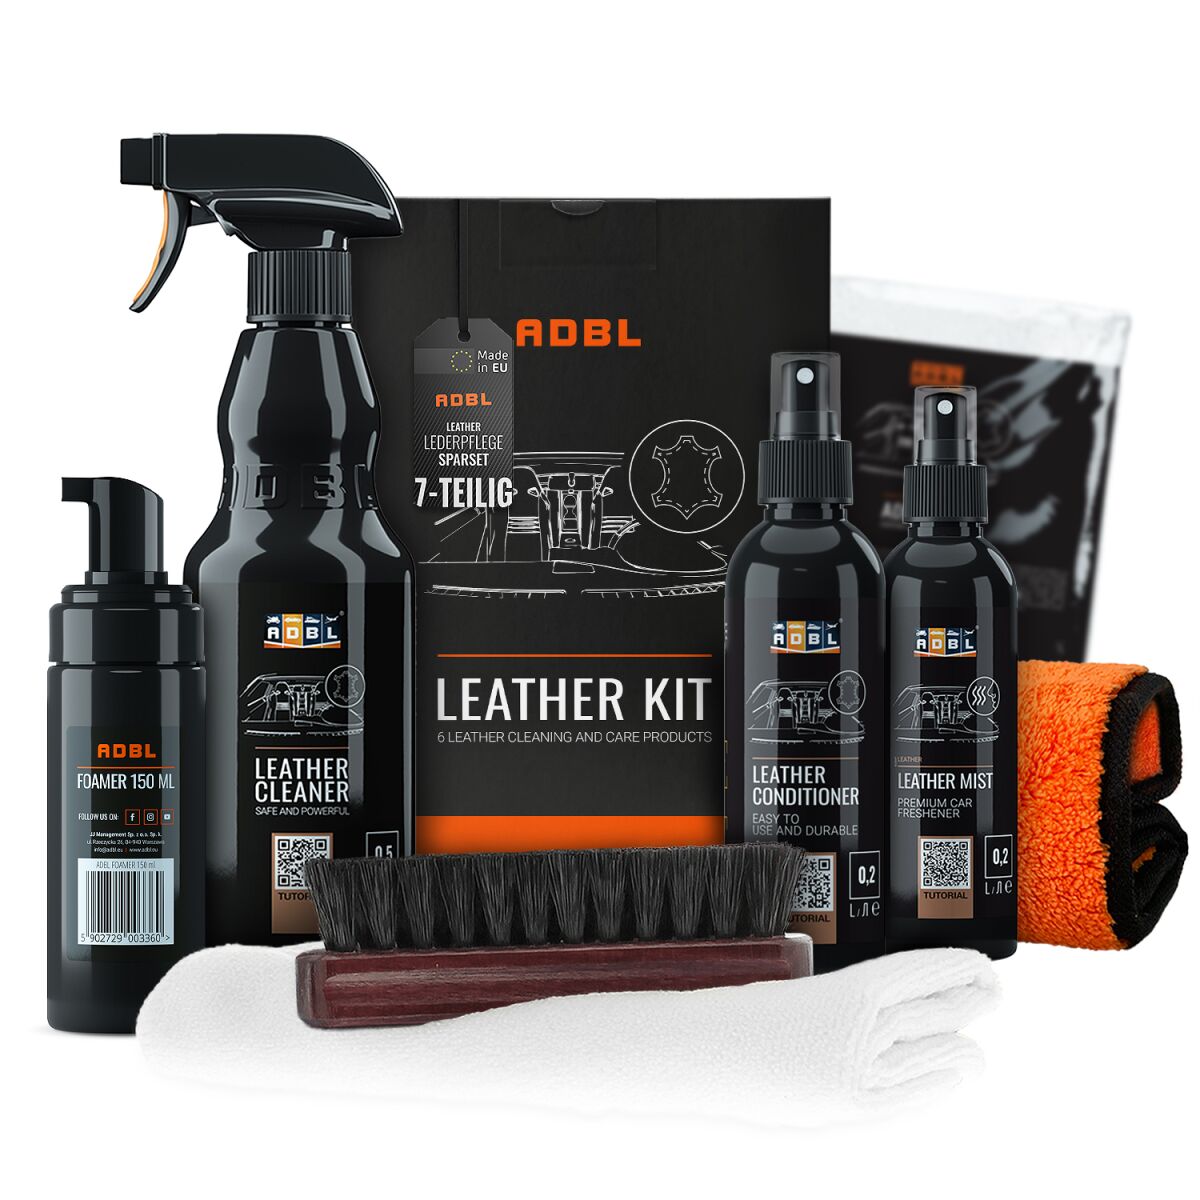 ADBL Leather Kit Lederpflegeset  waschguru Autopflege, 29,90 €